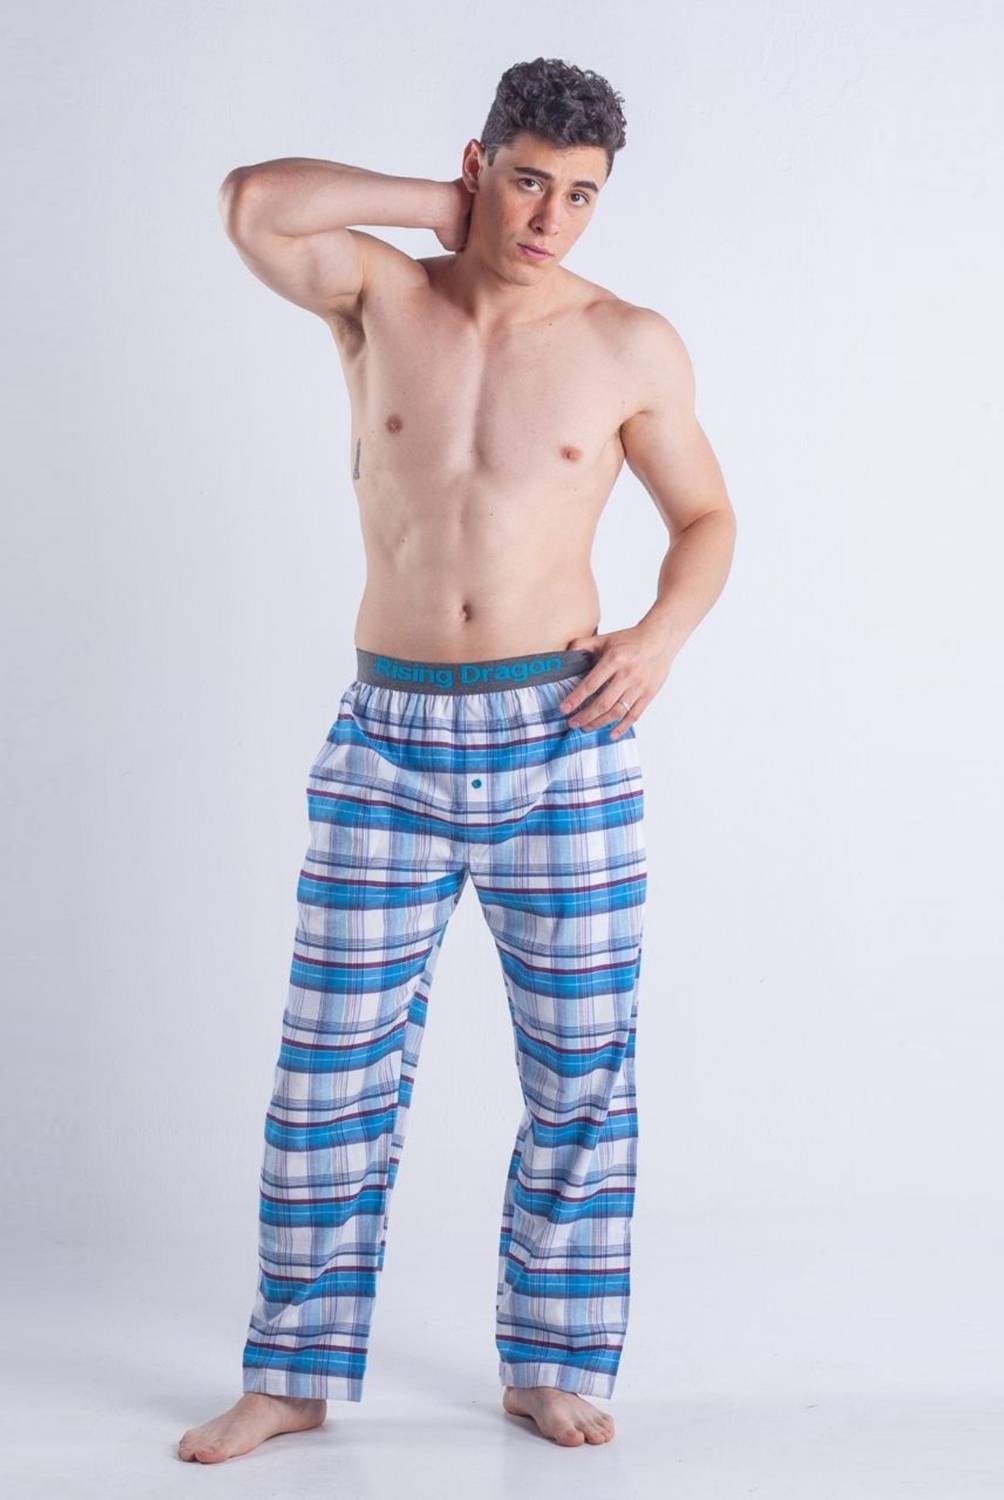 RISING DRAGON - Pantalón Pijama Hombre